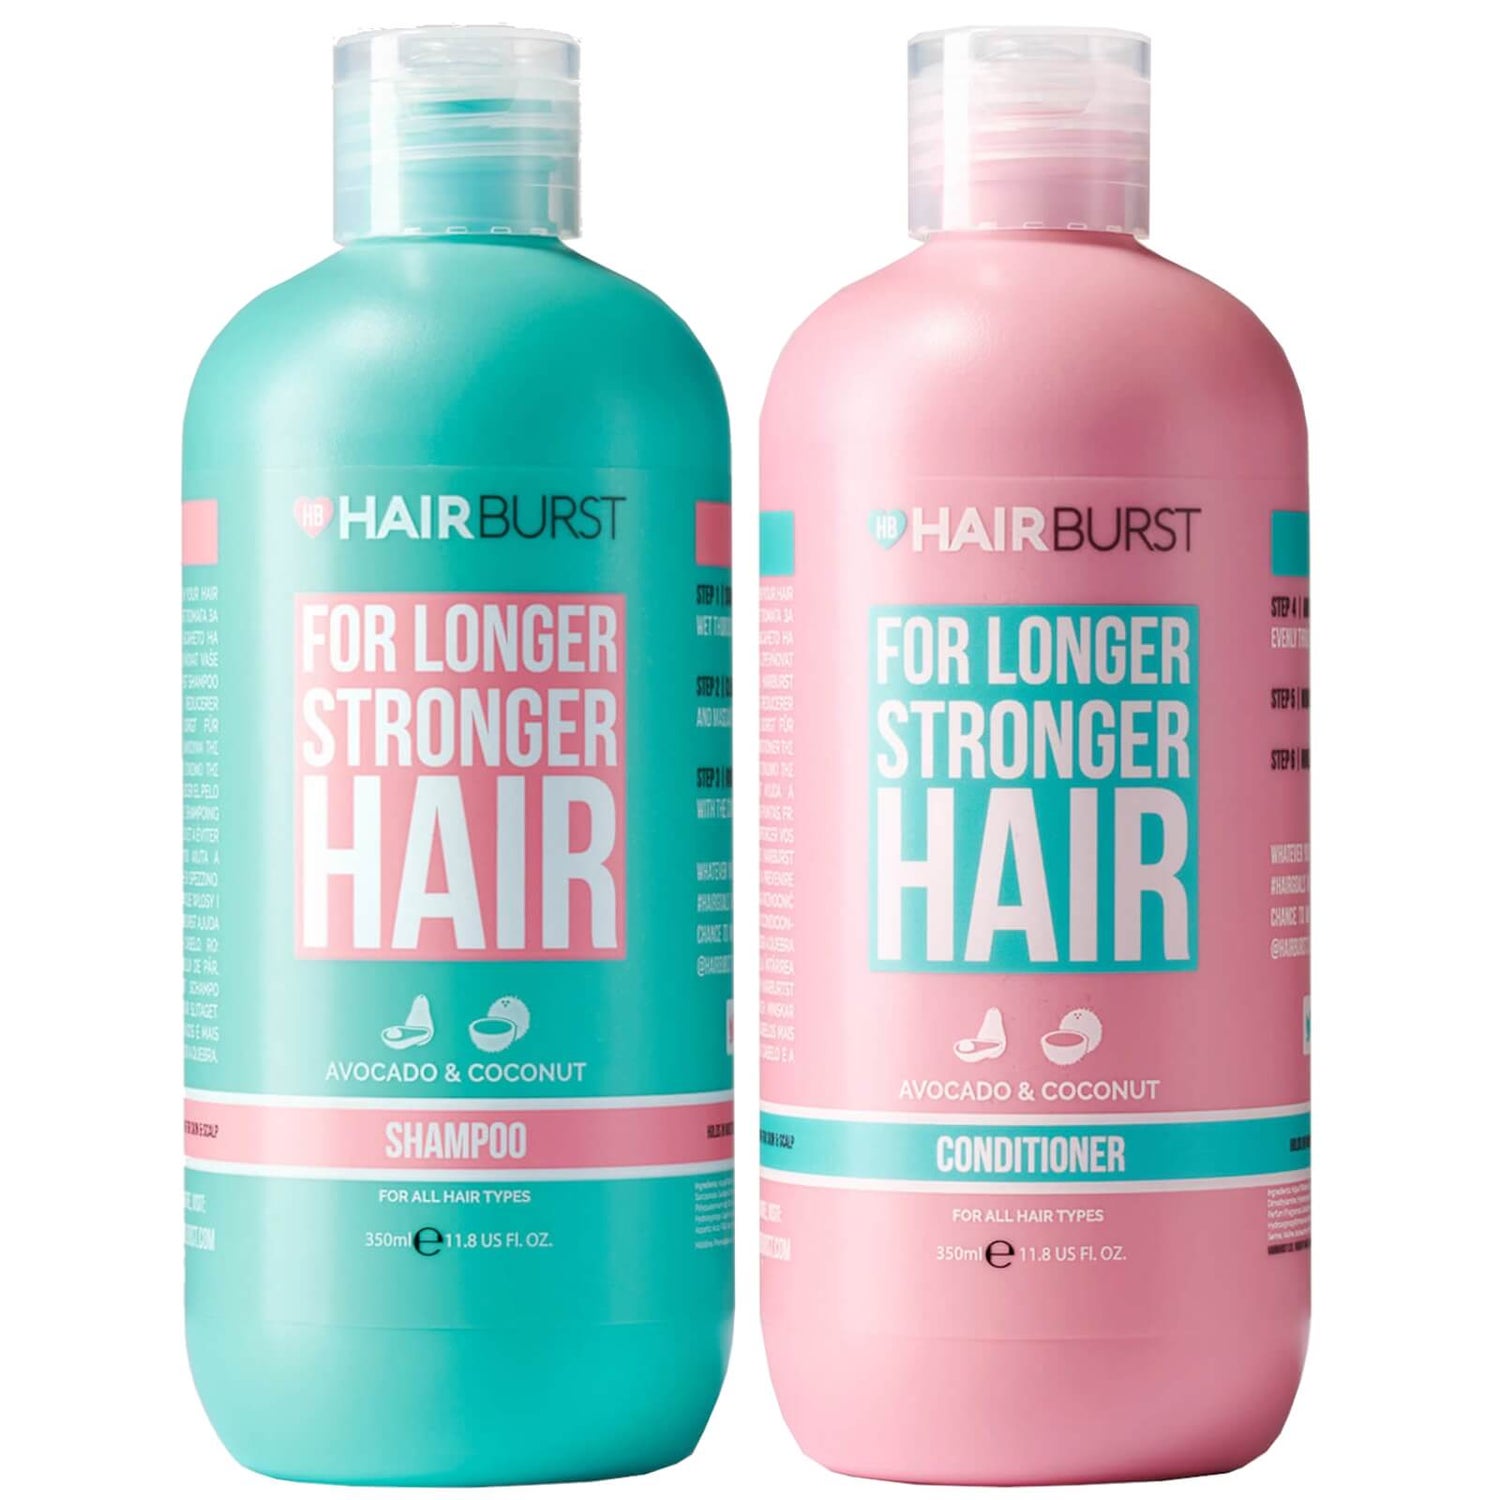 Hairburst Original Shampooo and Conditioner Bundle - LOOKFANTASTIC